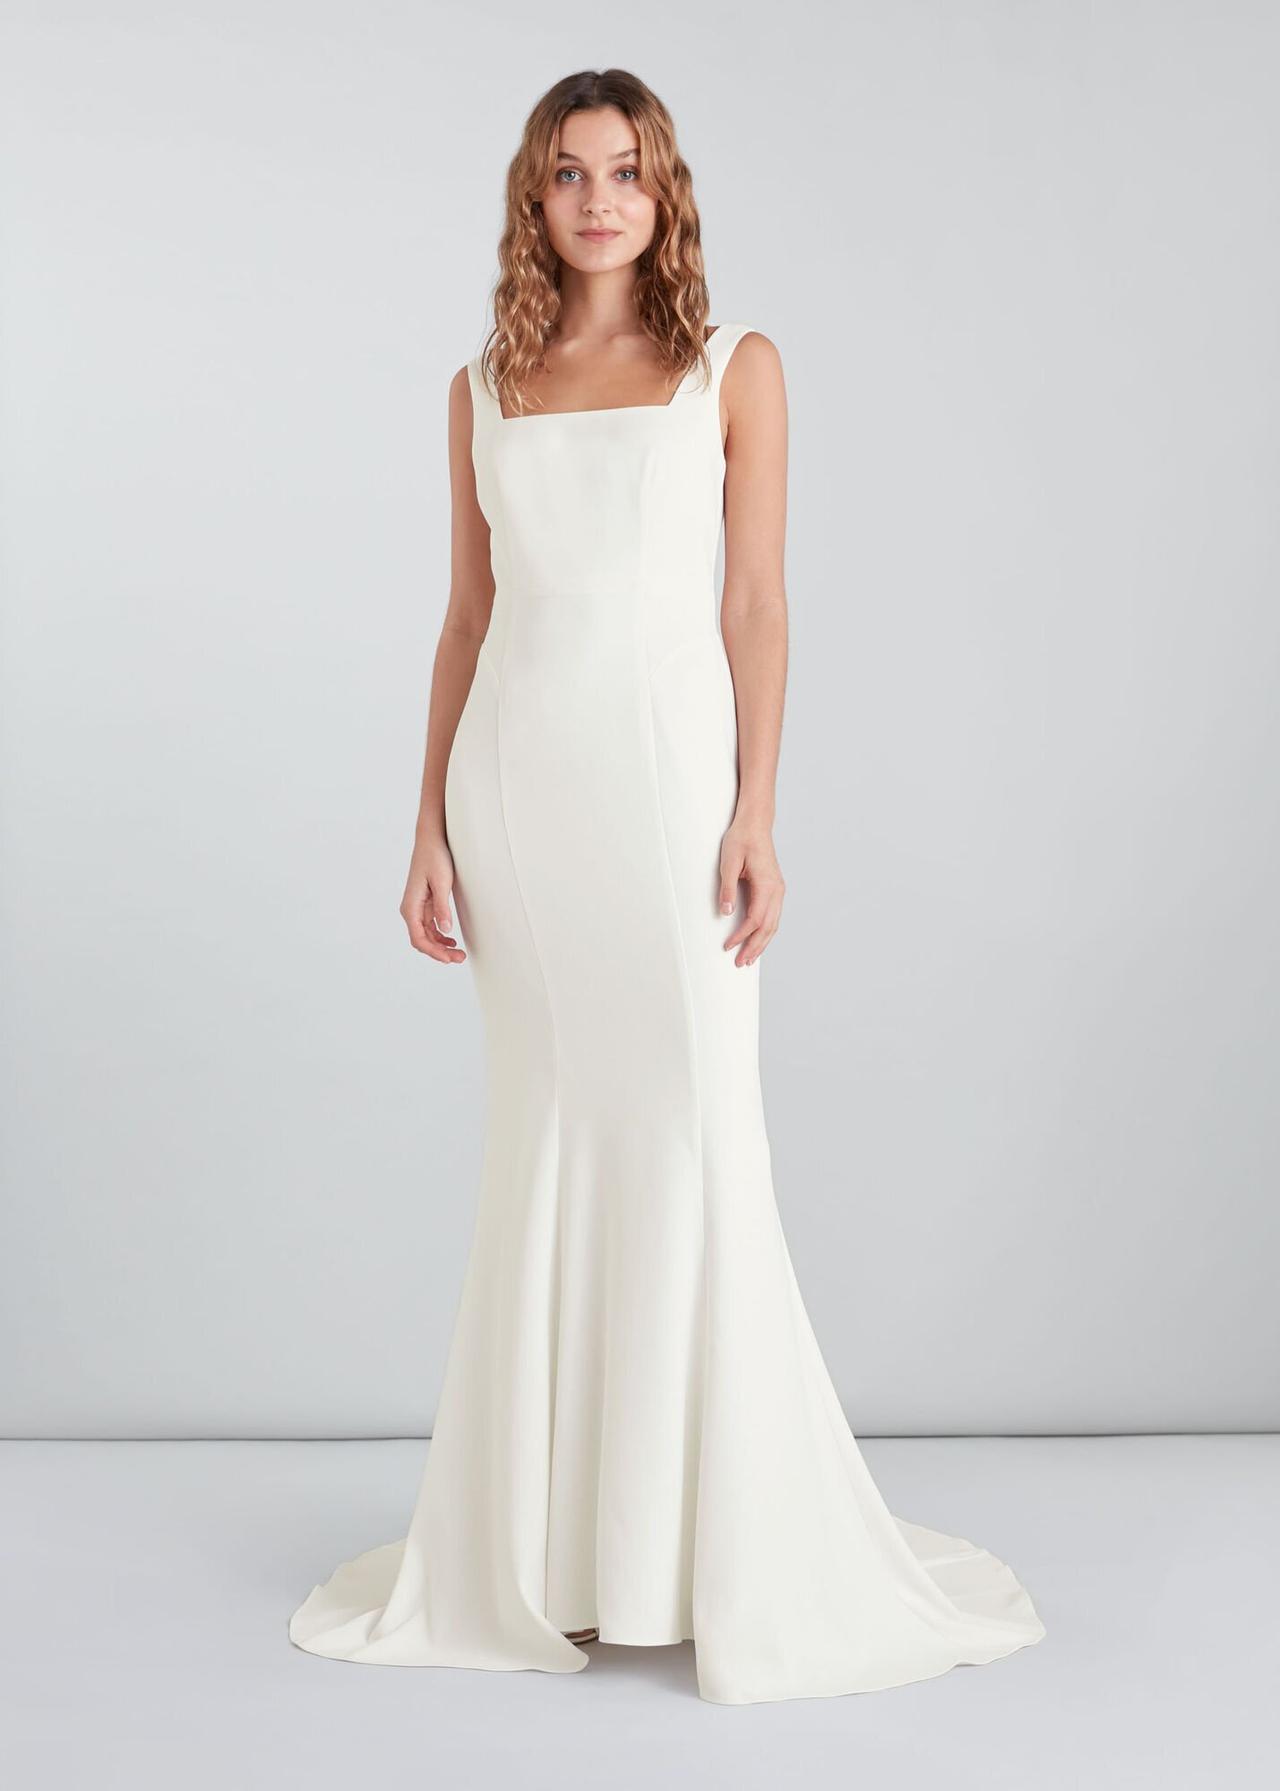 Model in a sleek white wedding dress